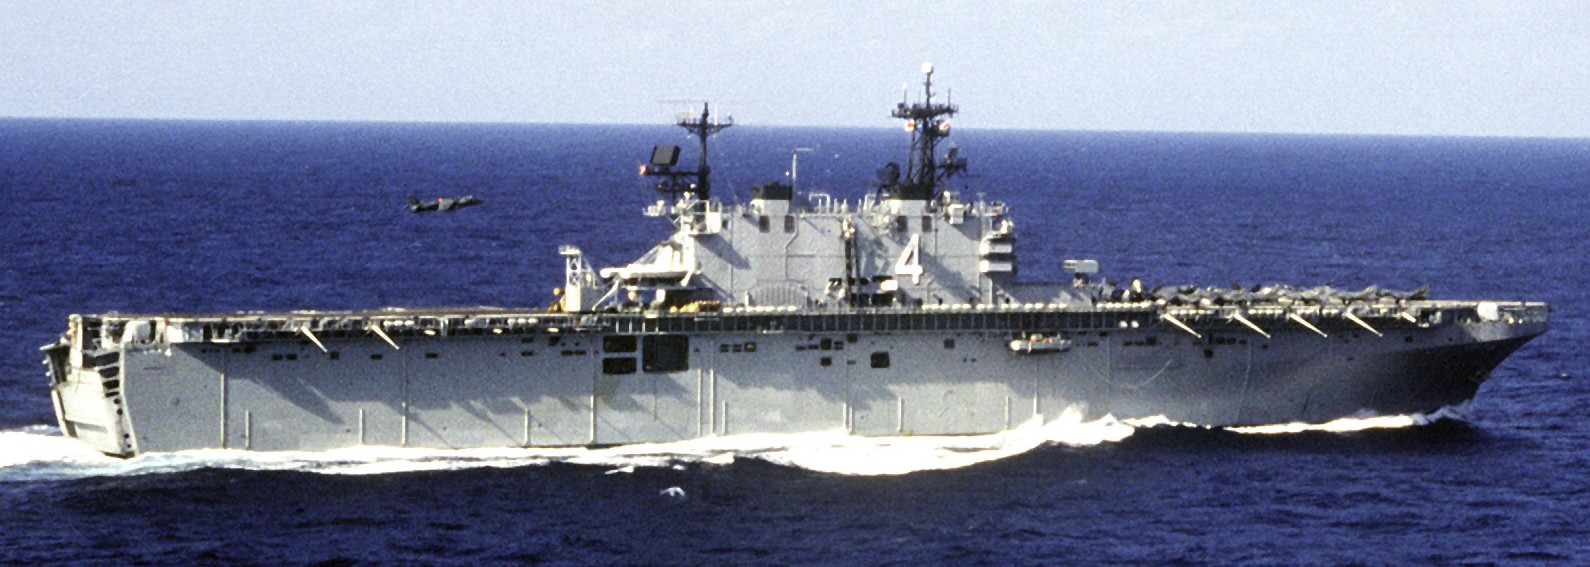 lha-4 uss nassau tarawa class amphibious assault ship us navy 80